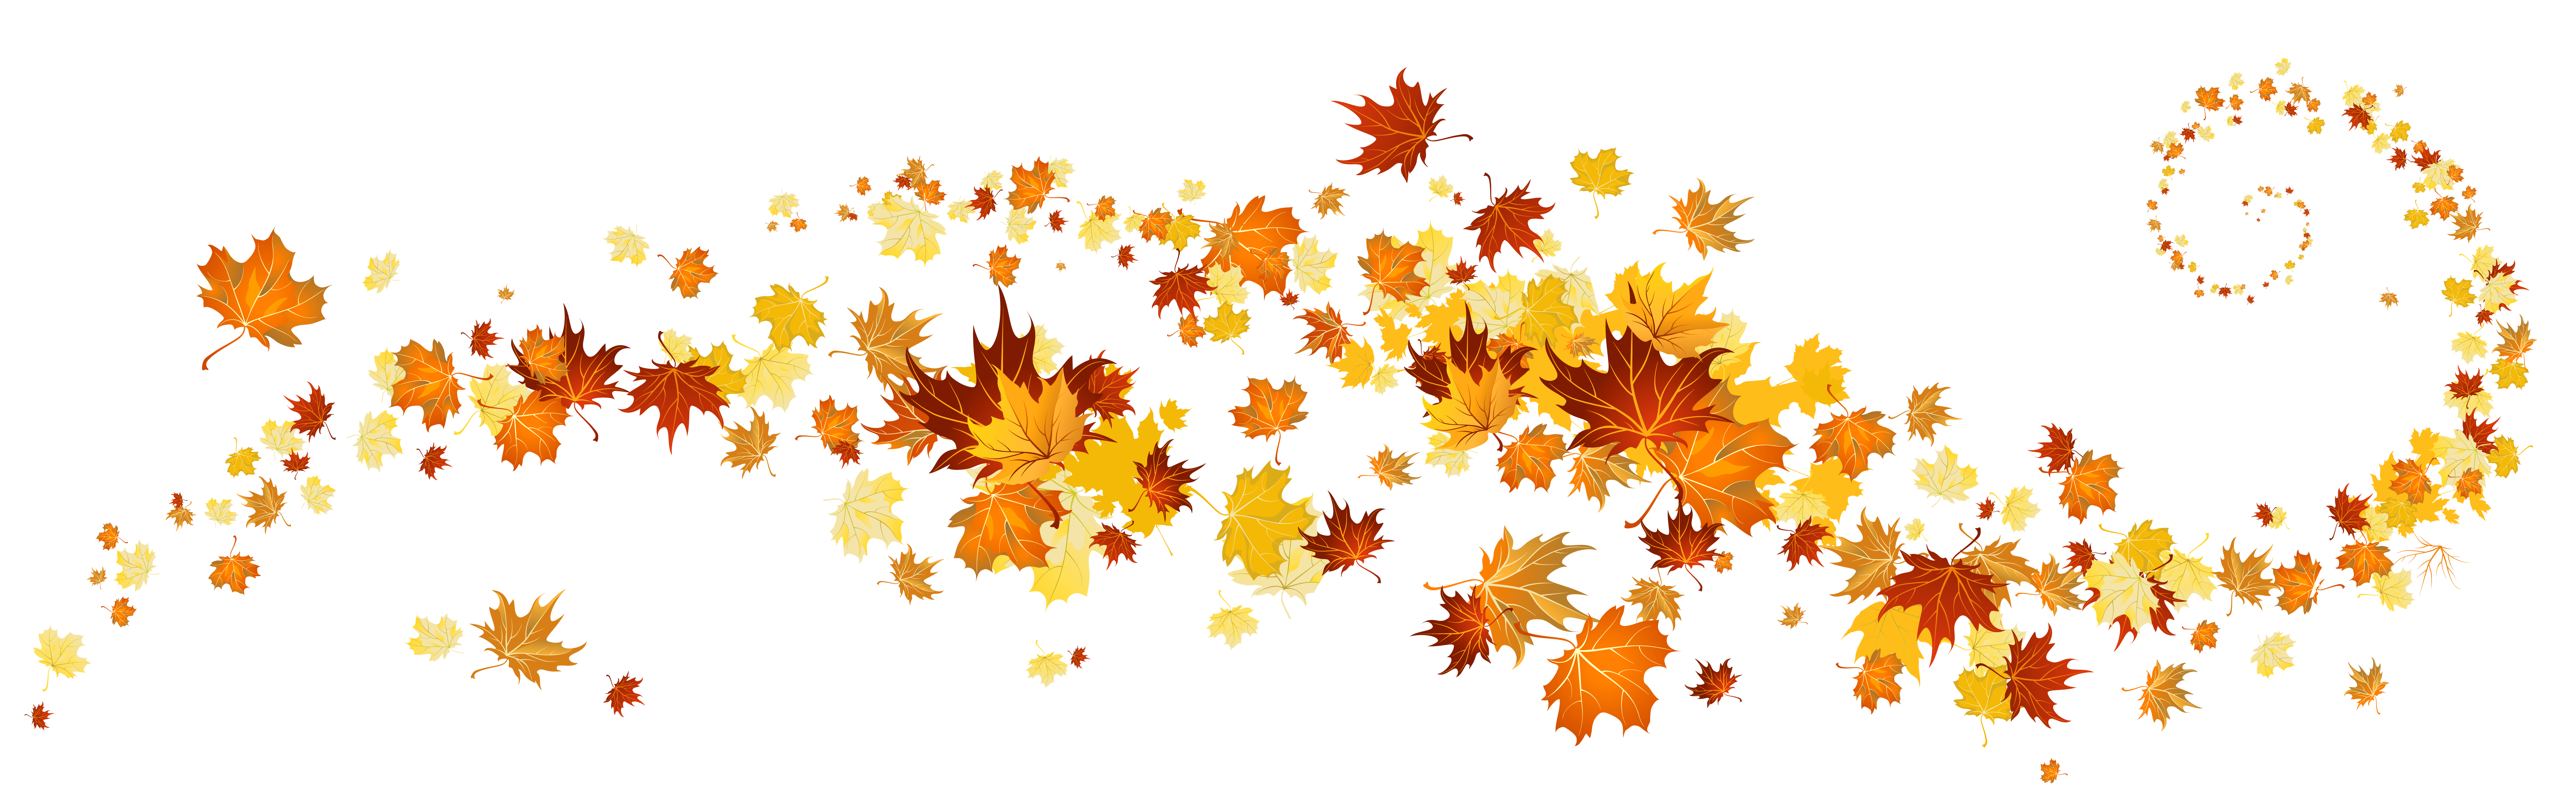 ... Clipart Autumn Leaves - c